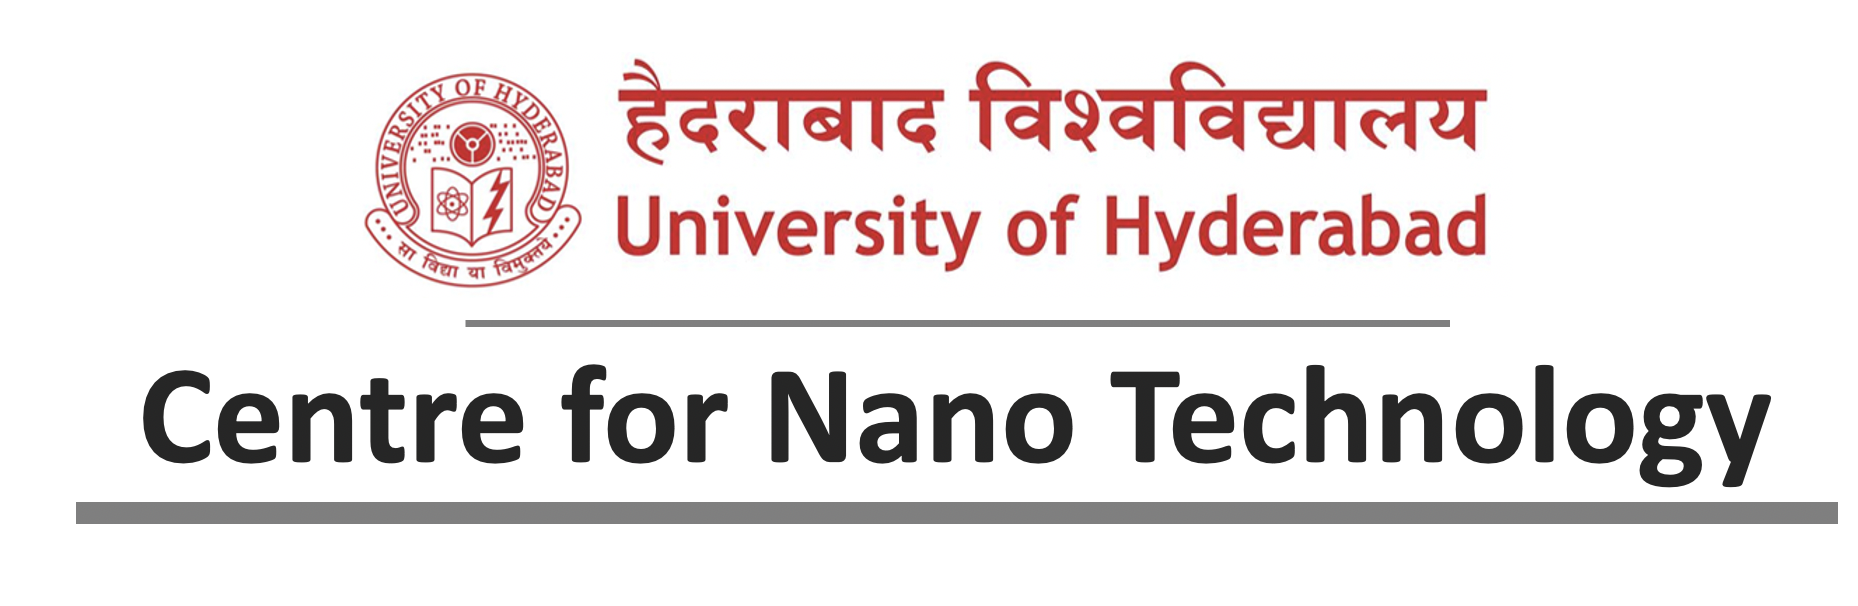 Centre for Nano Technology